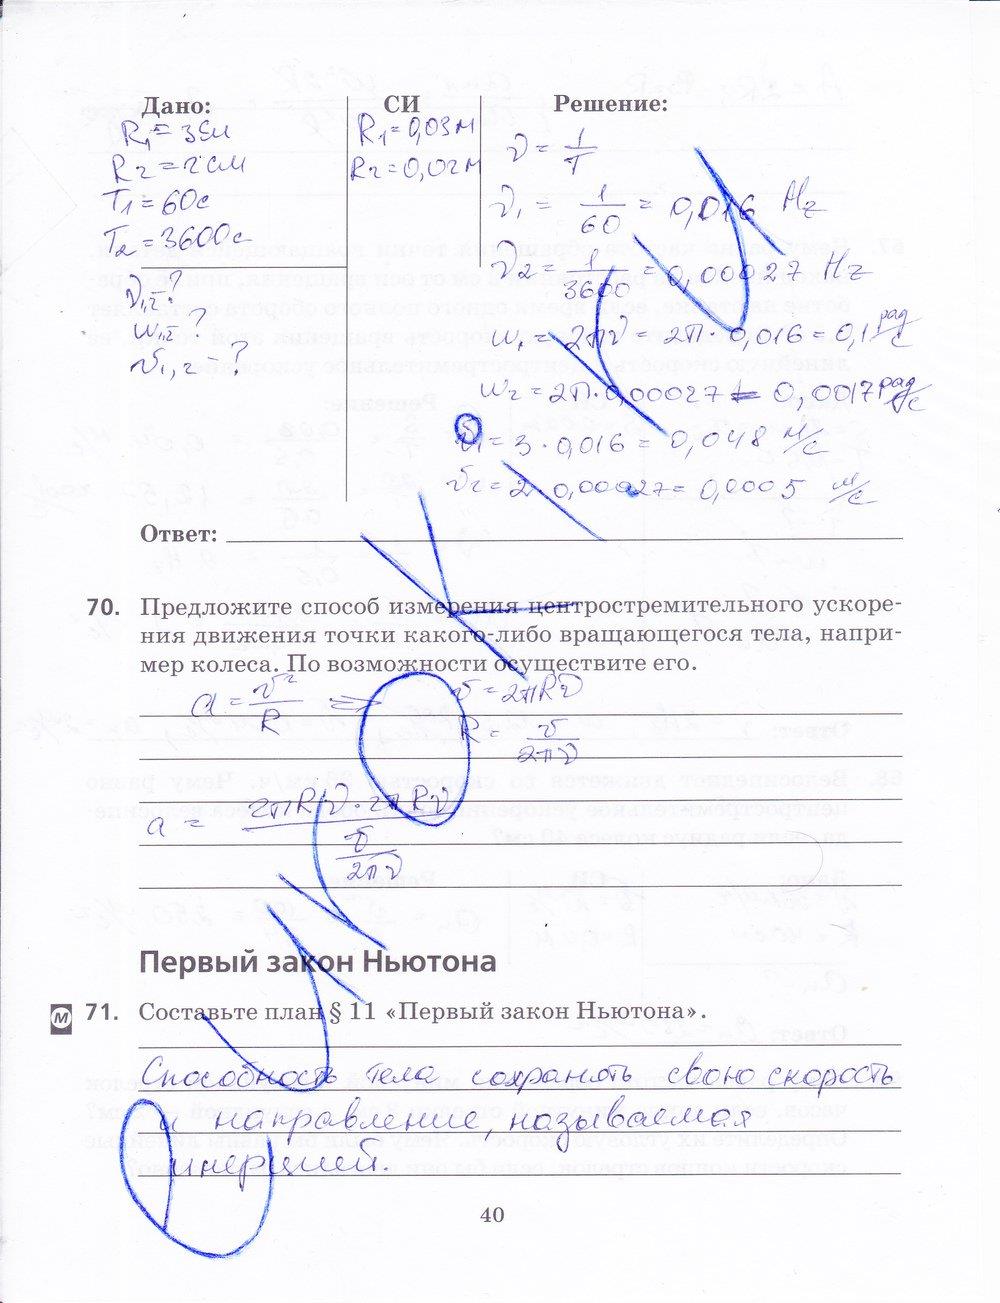 гдз 9 класс рабочая тетрадь страница 40 физика Пурышева, Важеевская, Чаругин